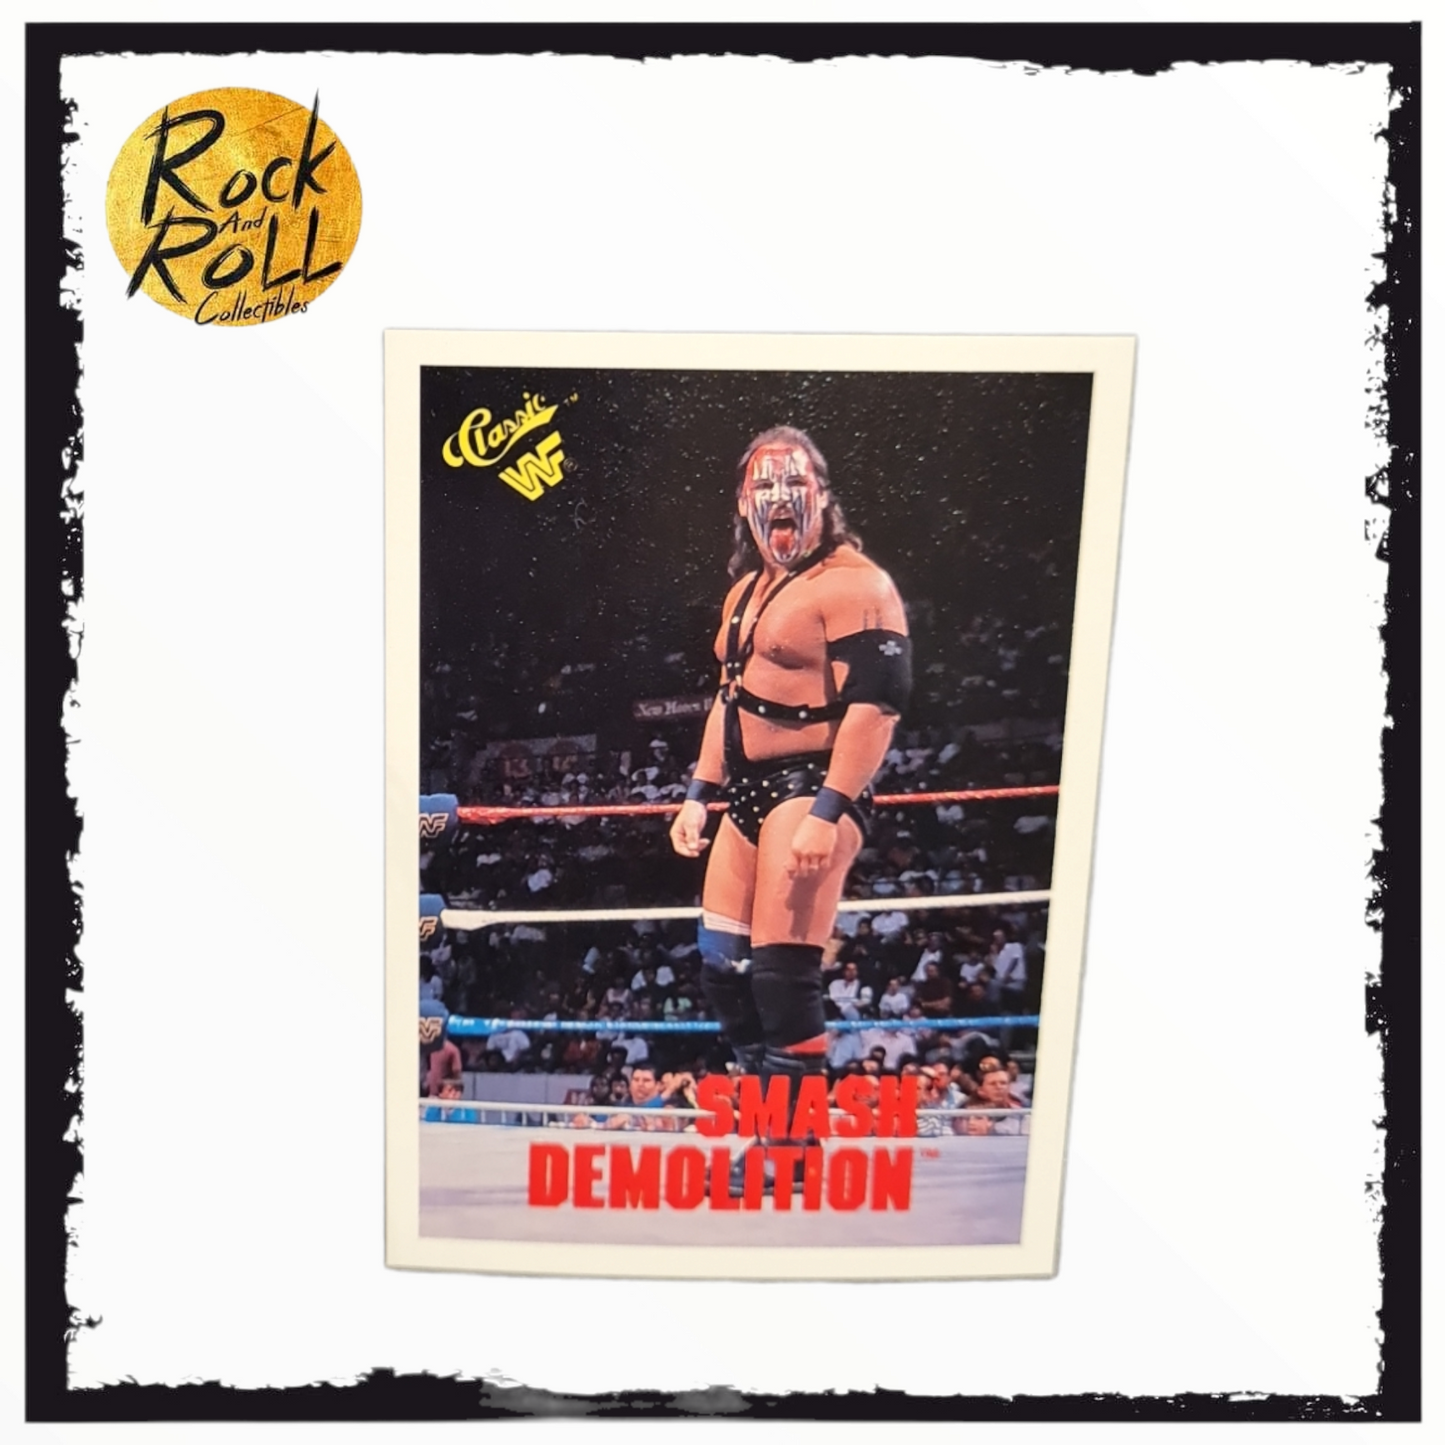 Smash Demolition Classic WWF 1990 Trading Card #128